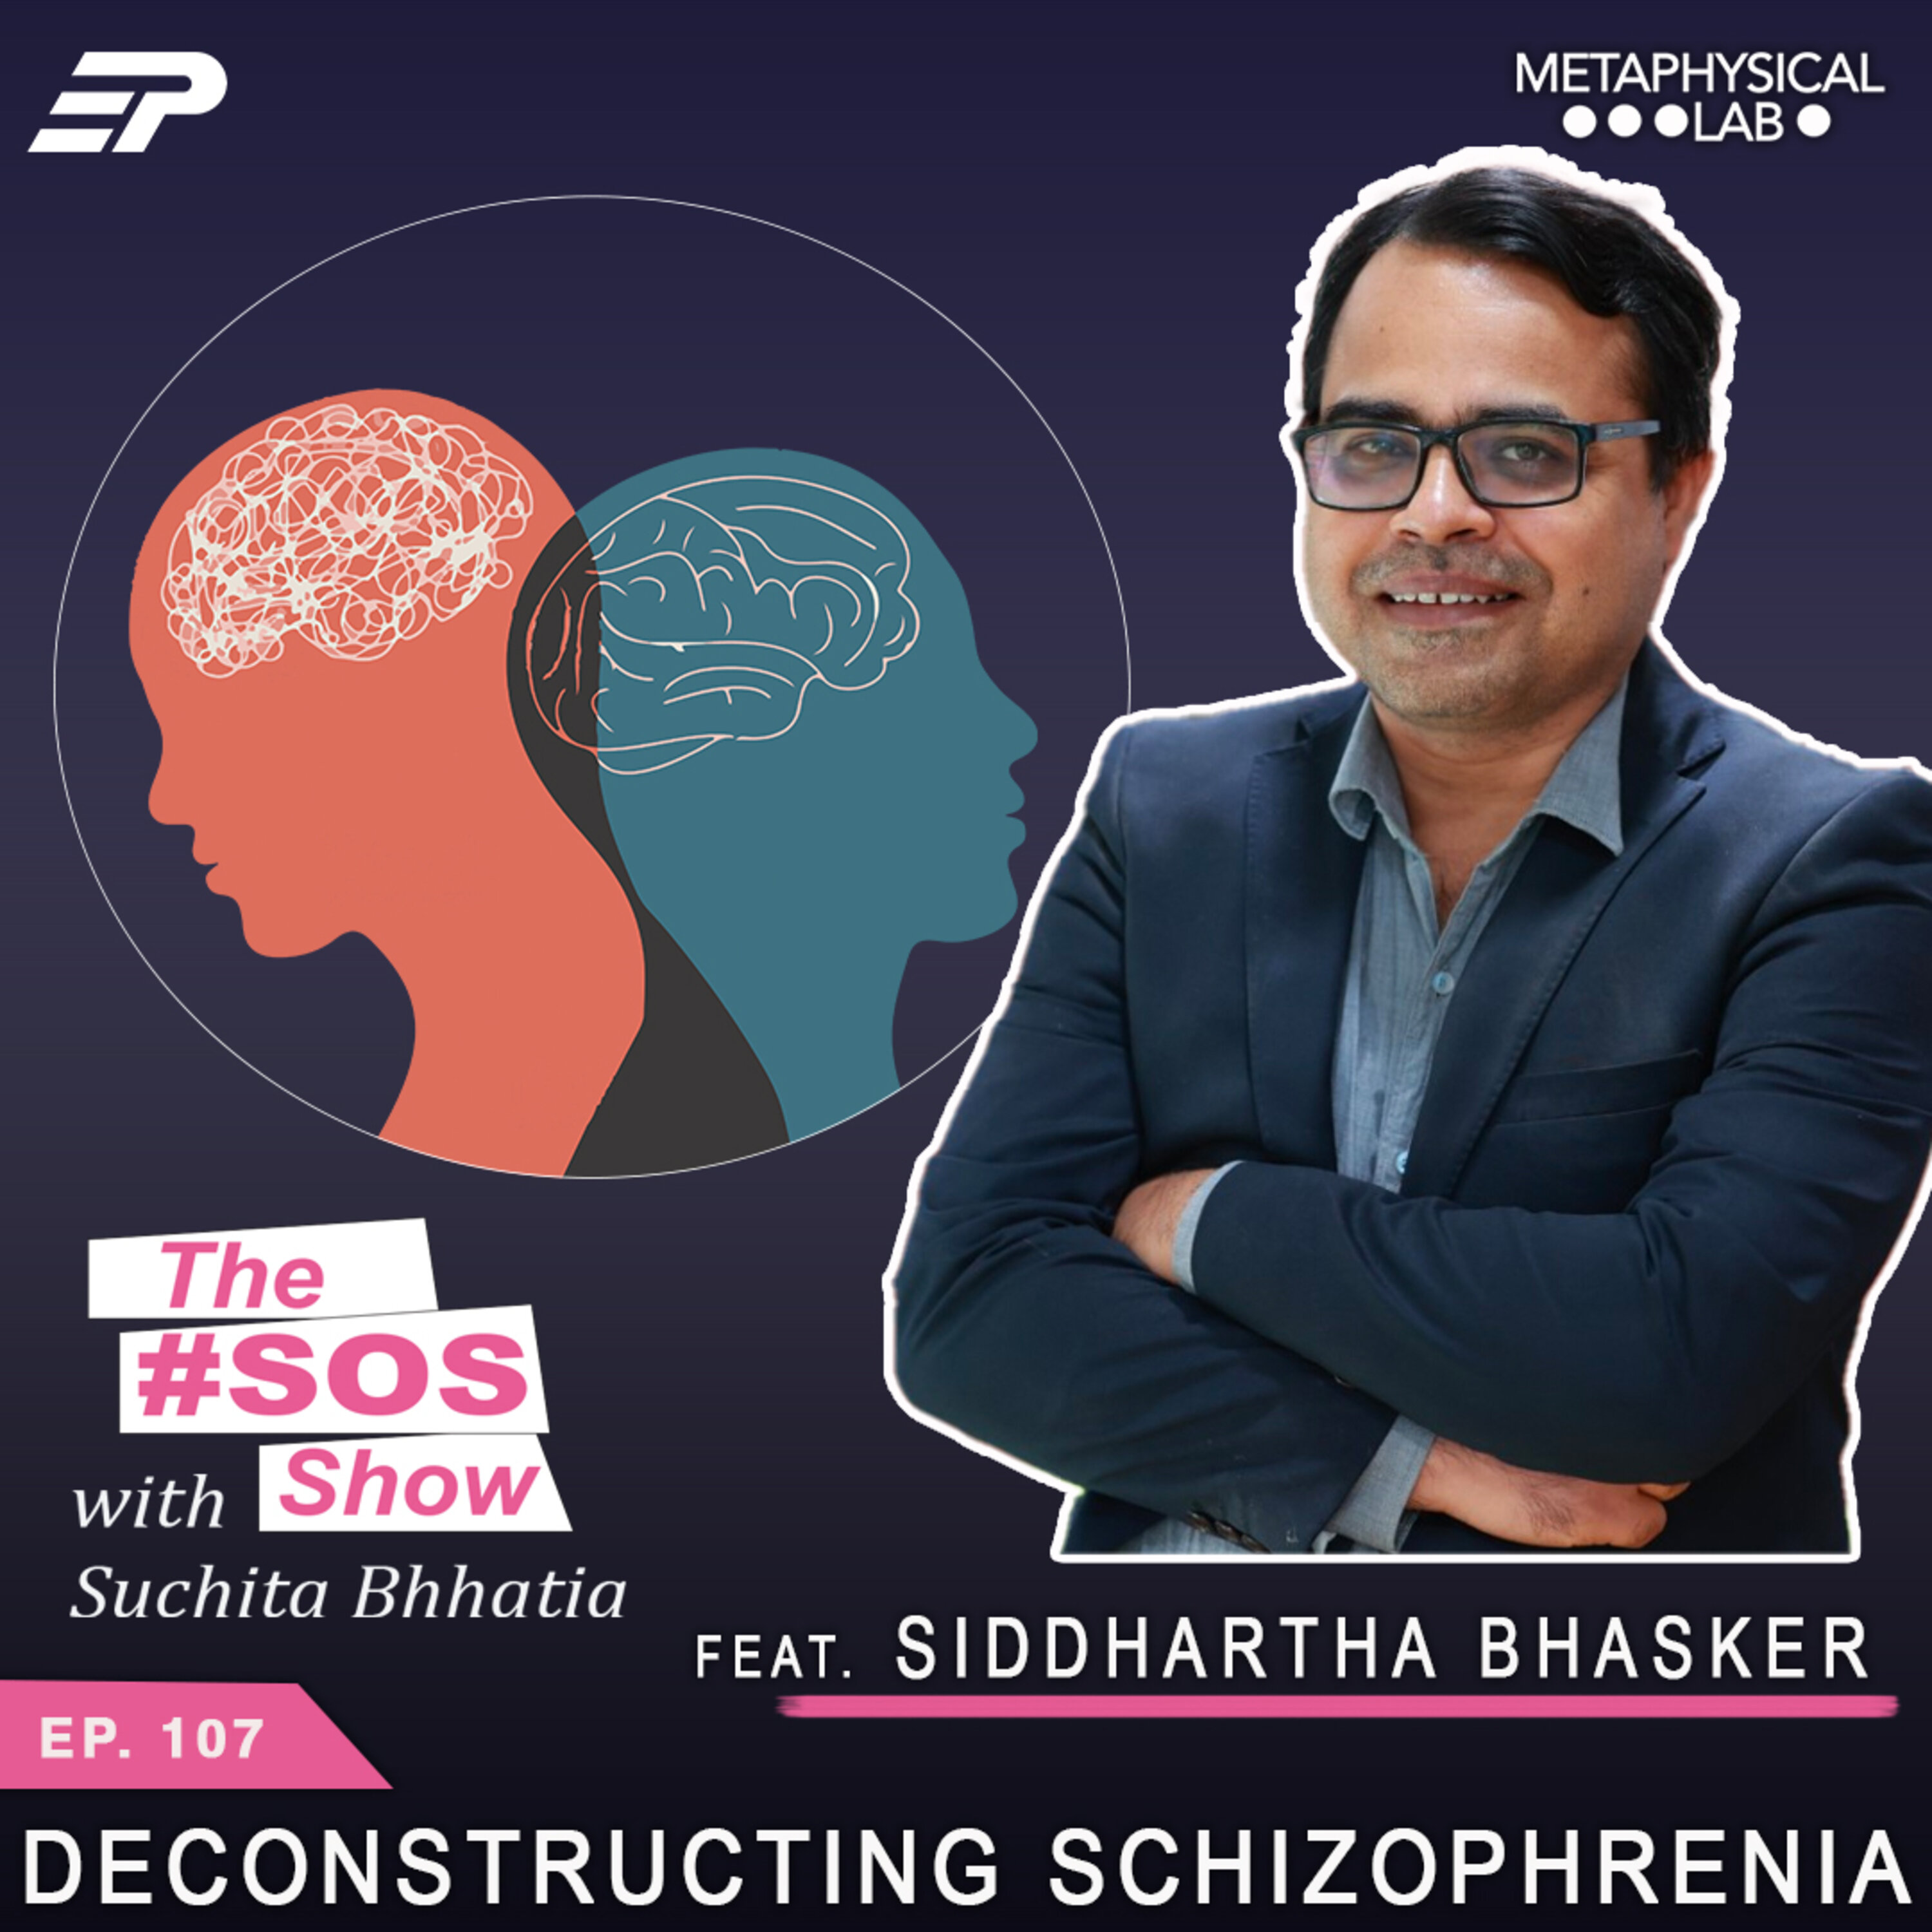 Ep 108 Deconstructing Schizophrenia ft. Siddhartha Bhasker